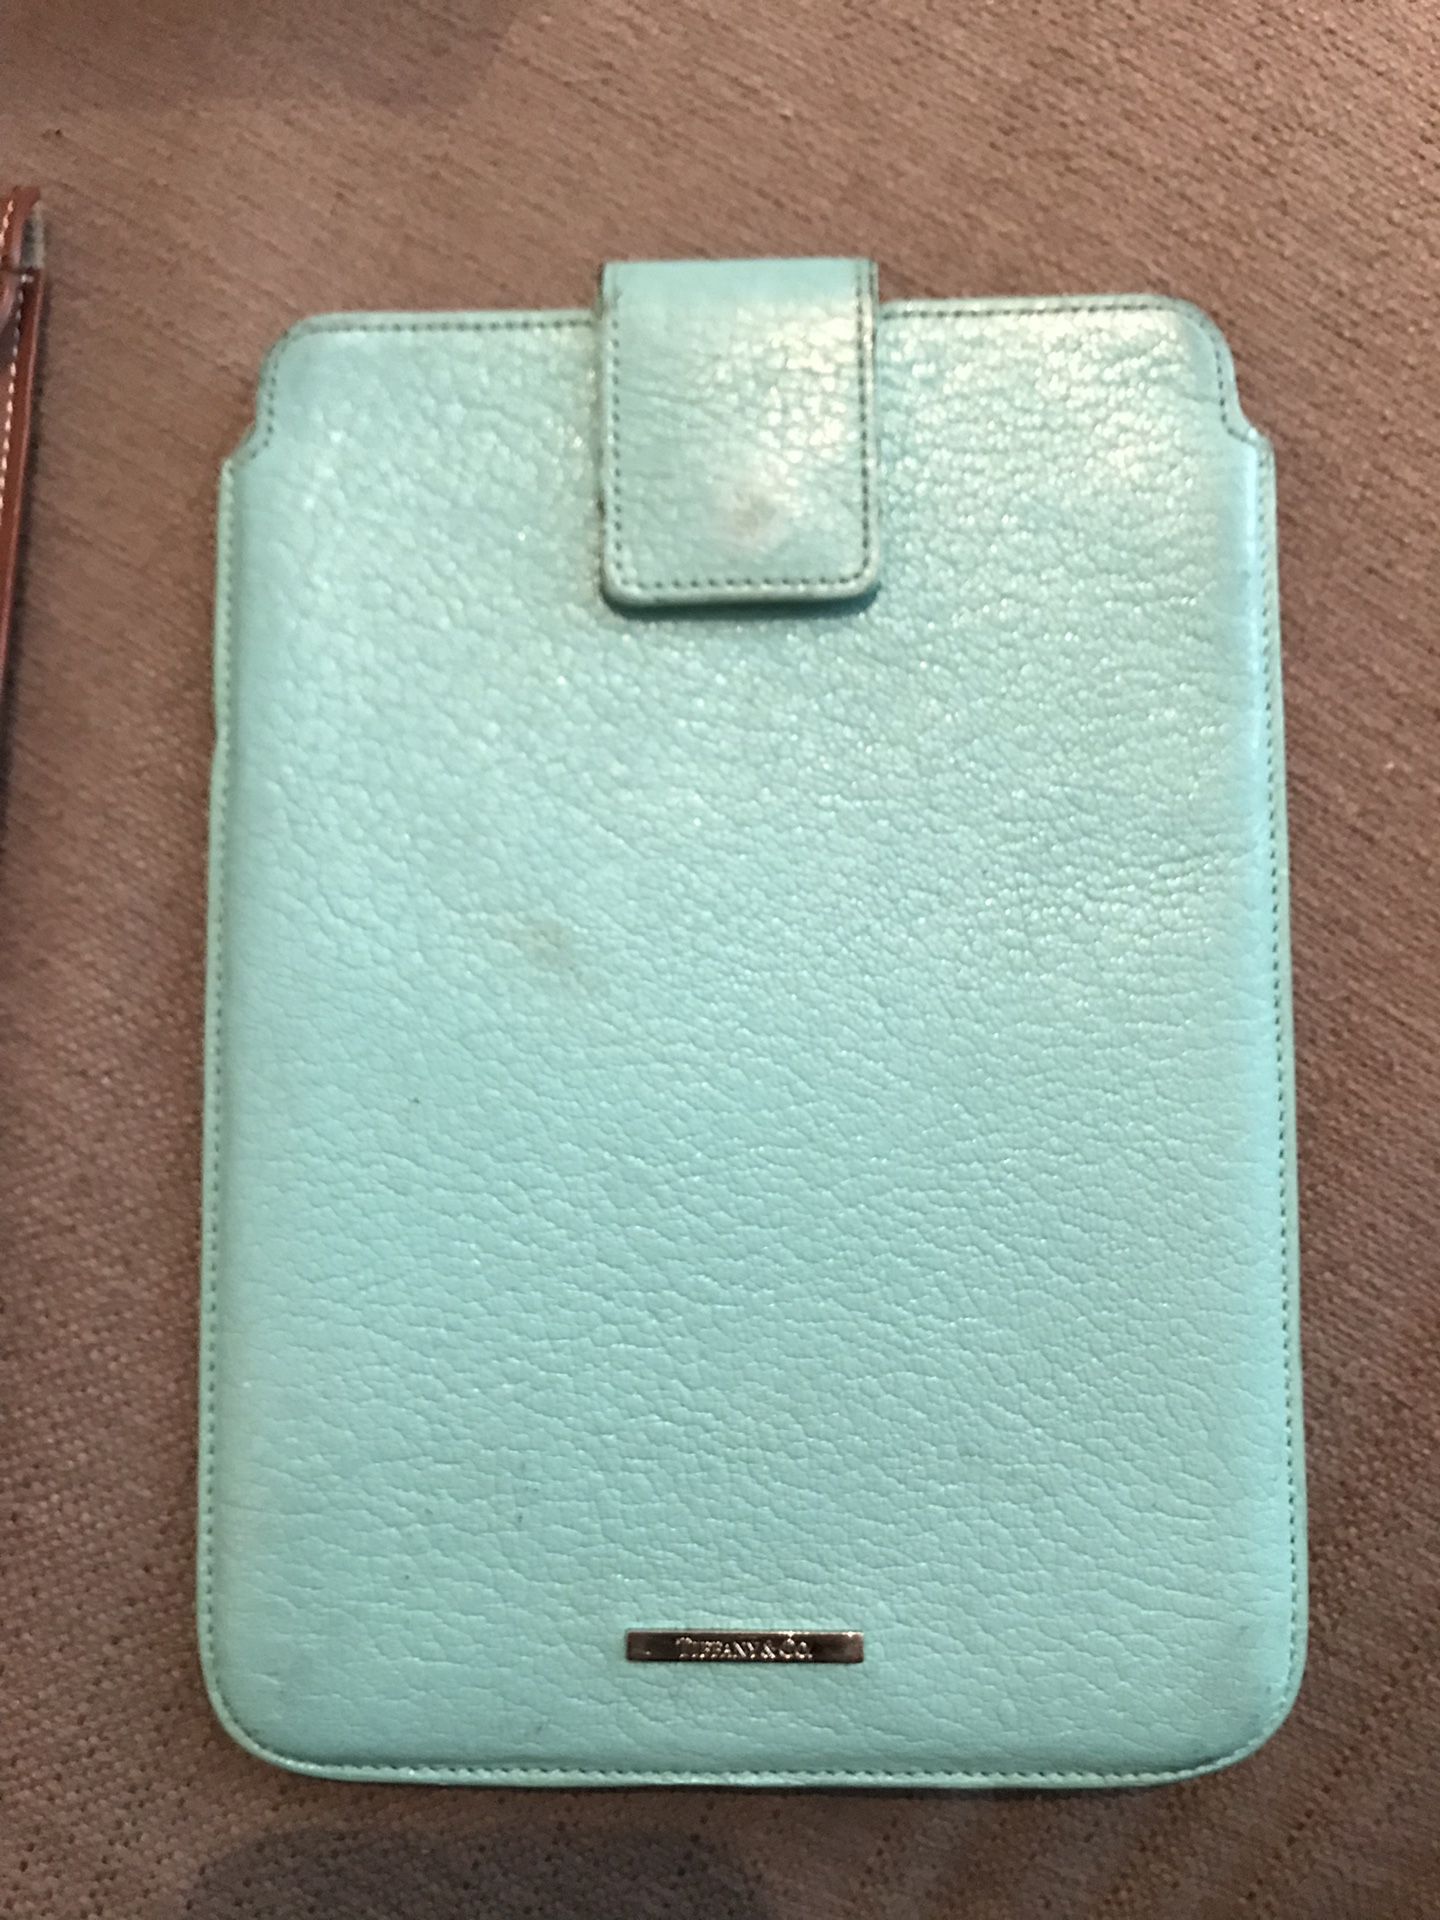 Tiffany & Co. iPad mini case